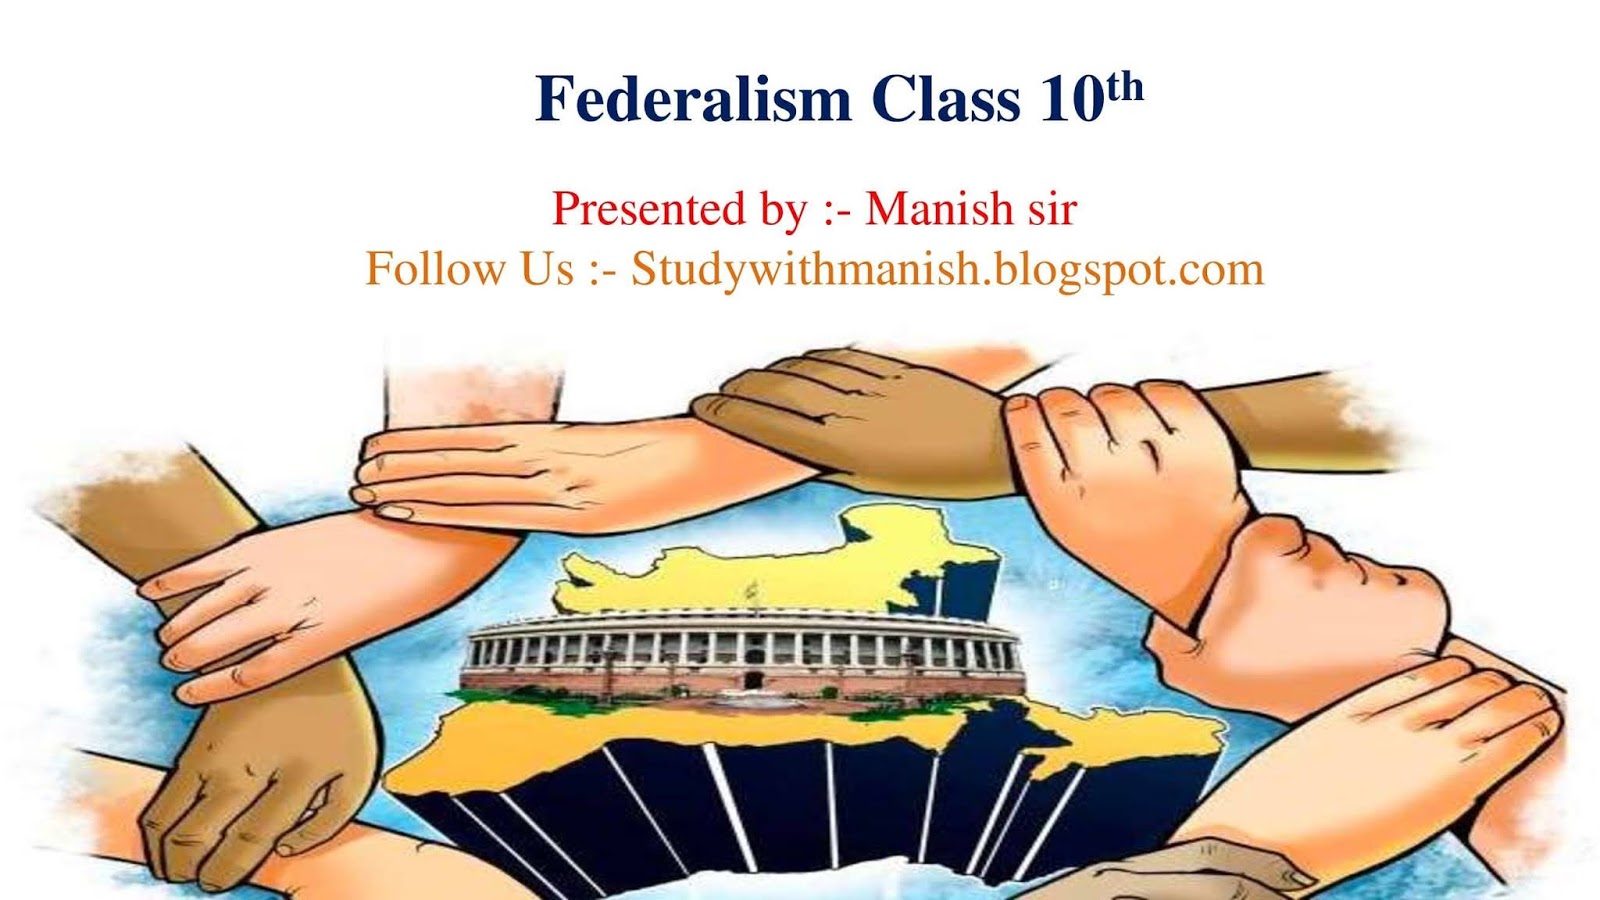 assignment of federalism class 10